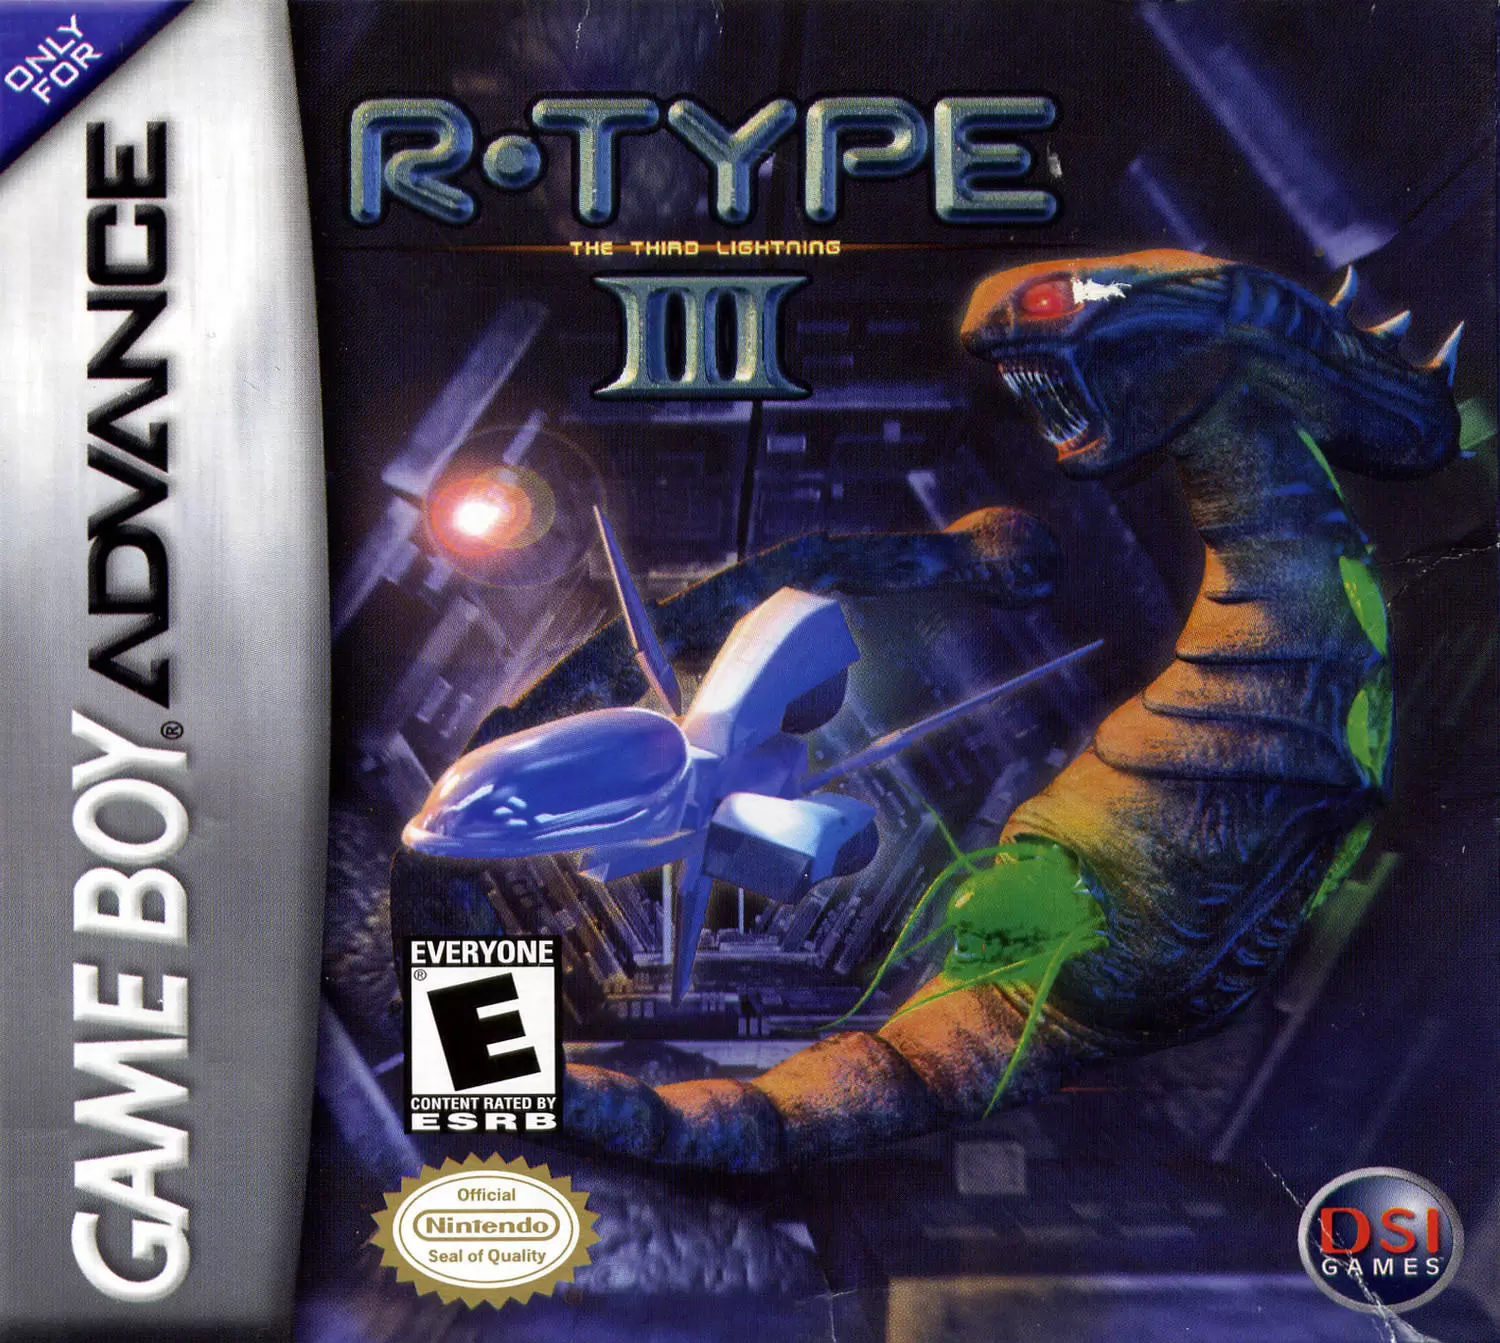 Game Boy Advance Games - R-Type III: The Third Lightning